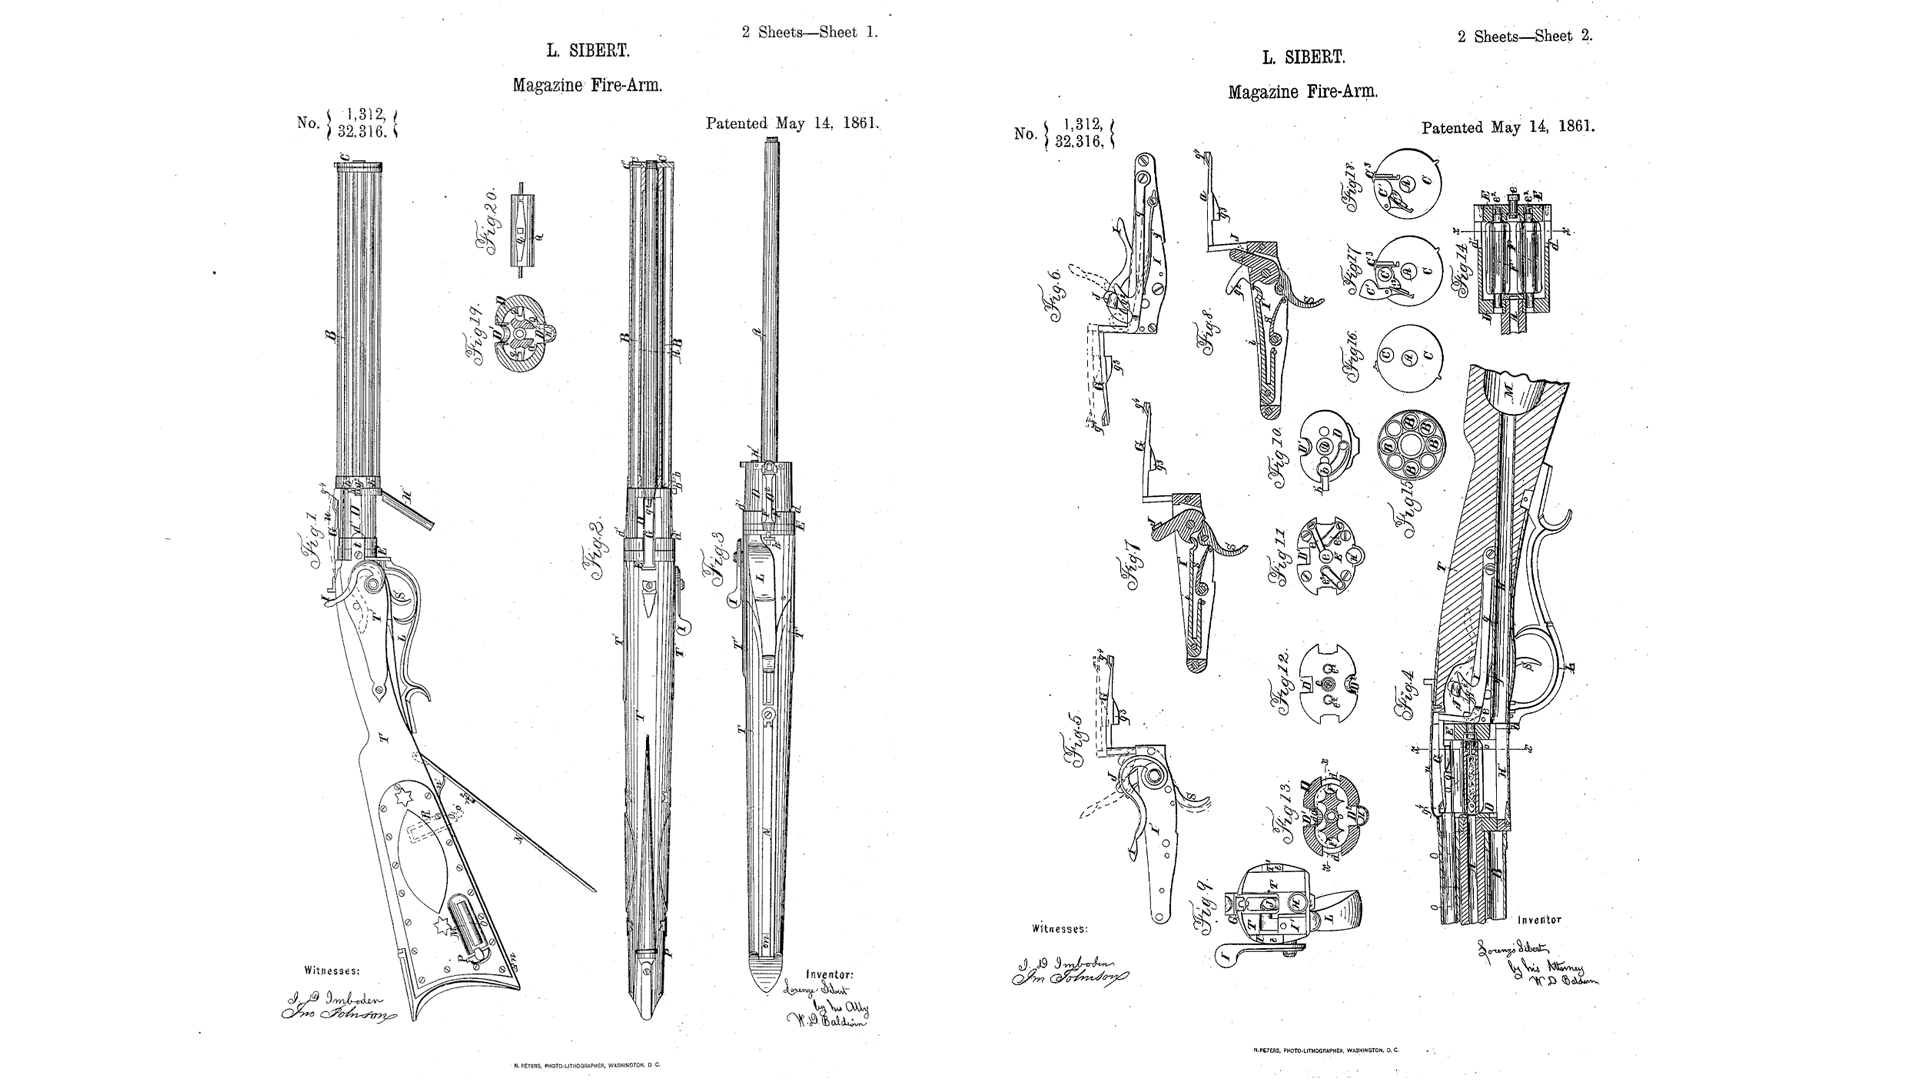 Patent drawing for Lorenzo Sibert of Staunton Virginia 48-shot repeating rifle Viriginia Pacificator